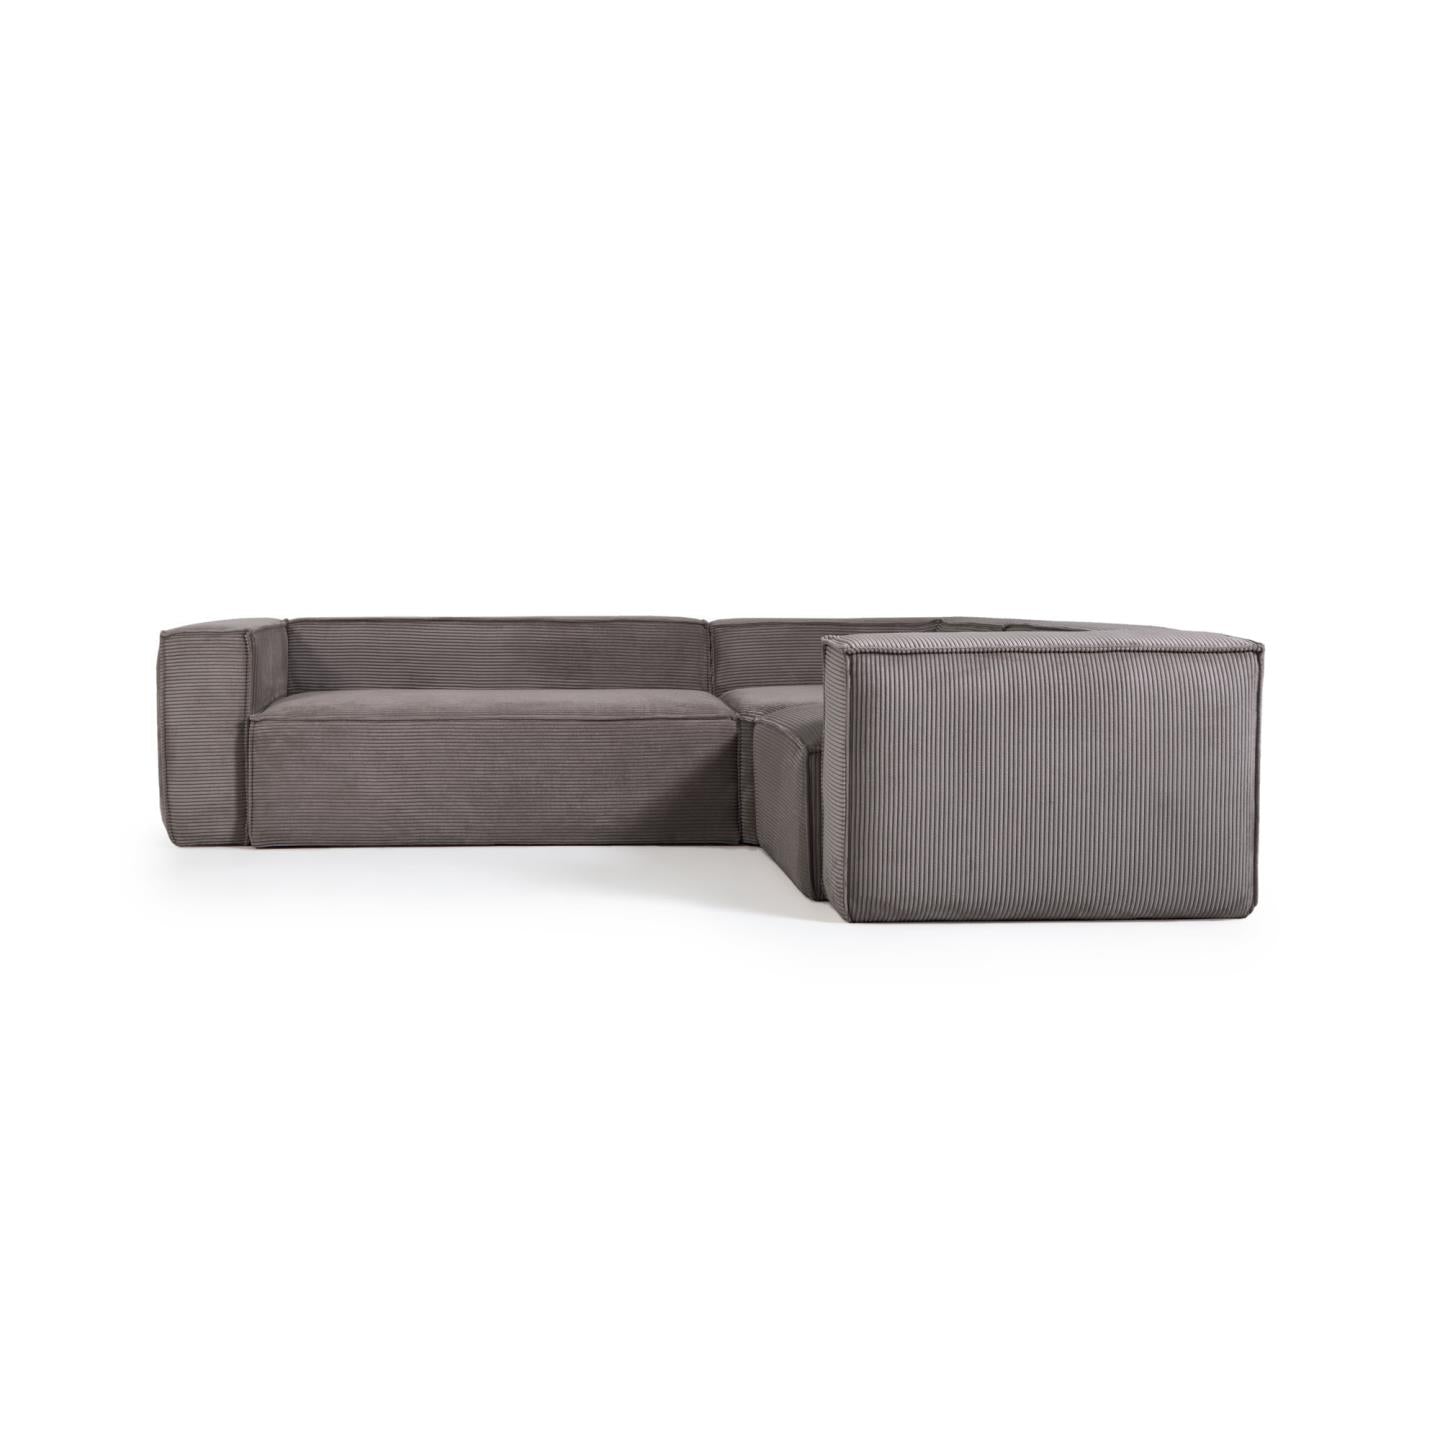 Blok 3 seater corner sofa in grey wide seam corduroy, 290 x 230 cm / 230 cm 290 cm